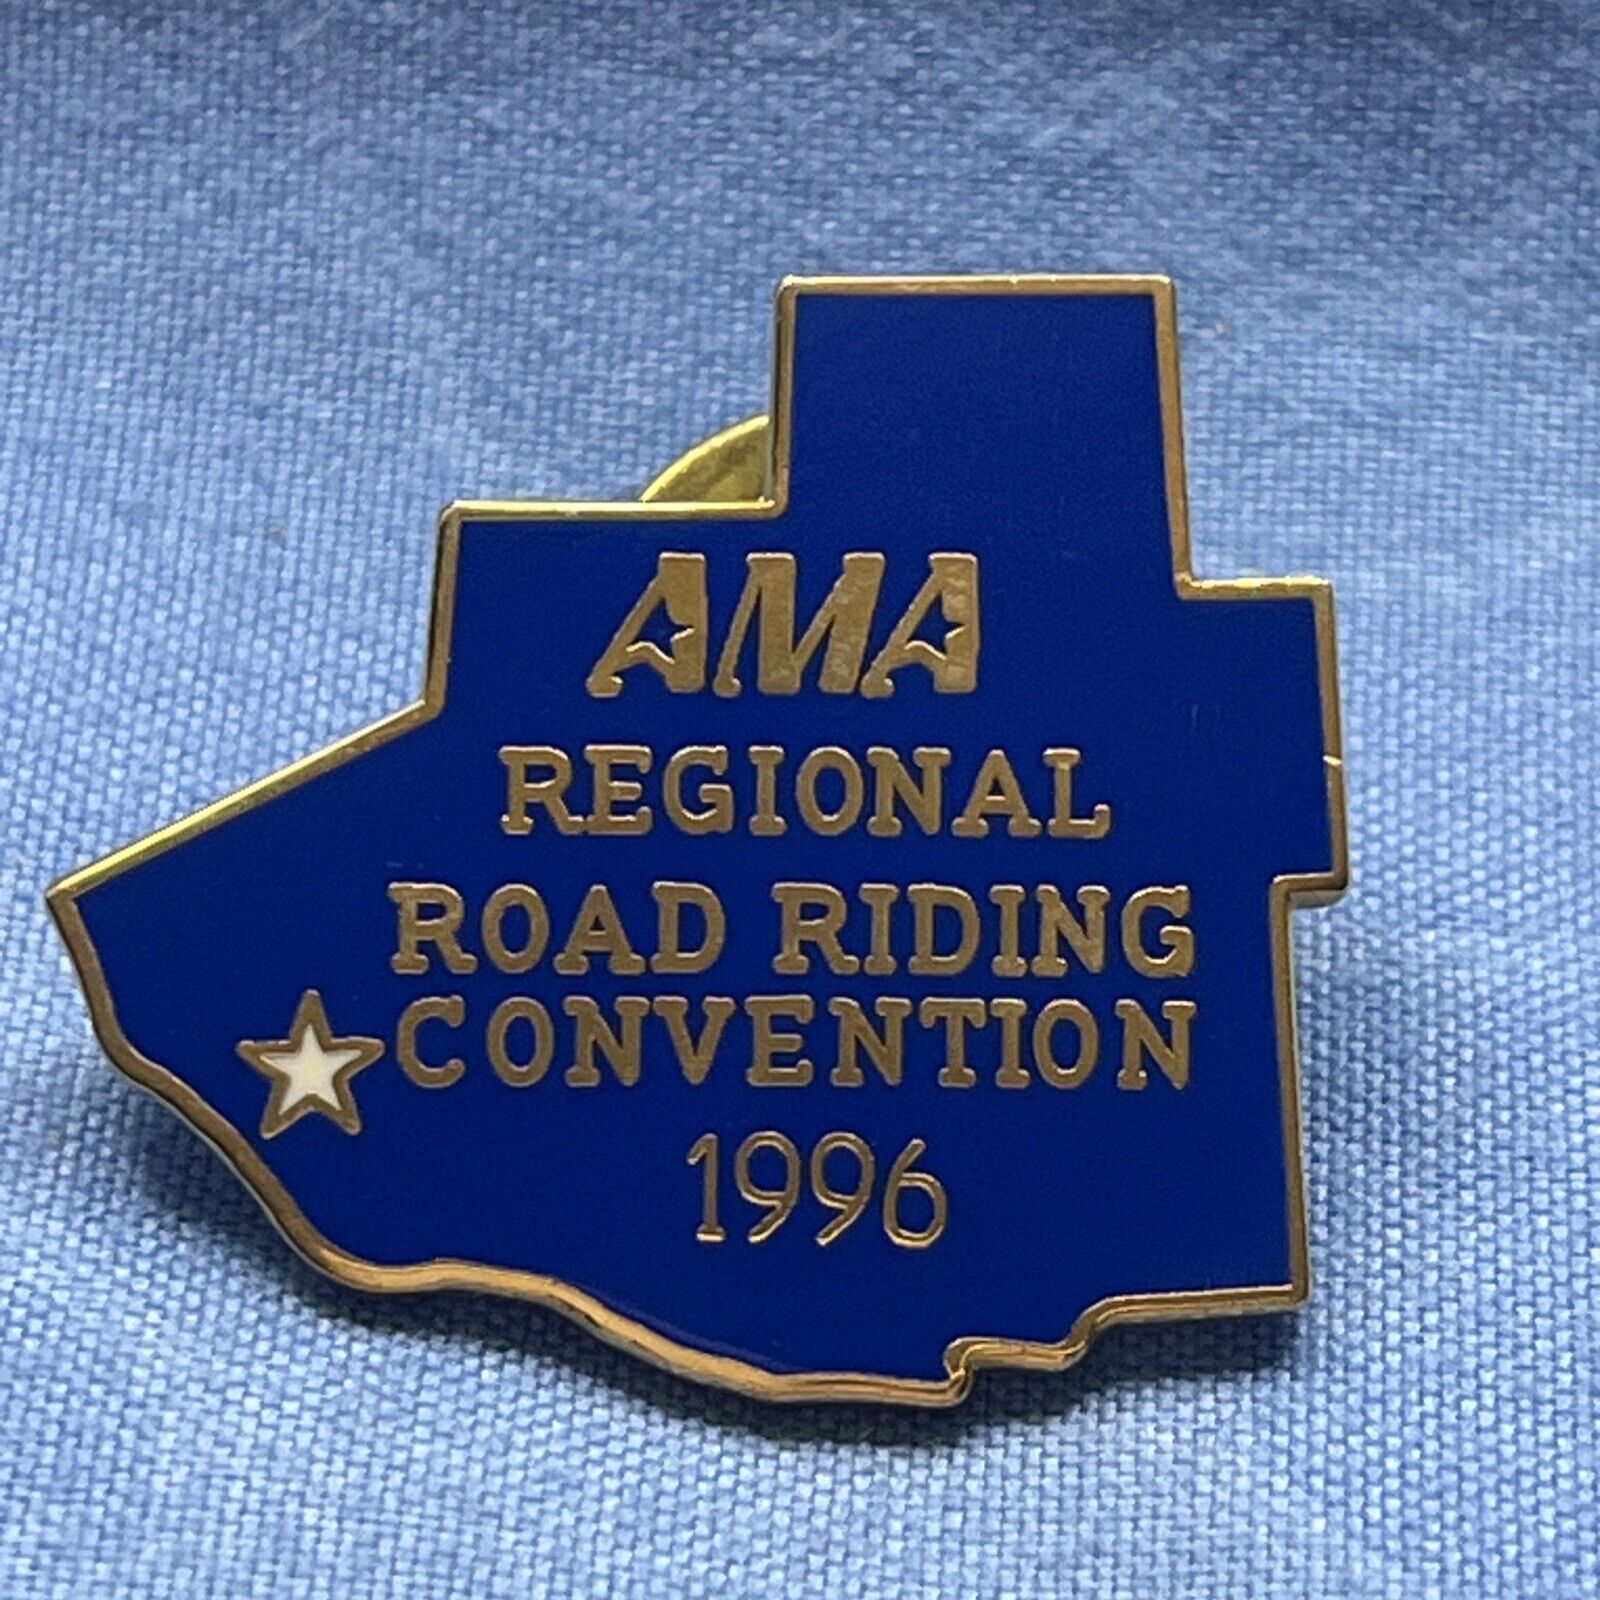 1996 AMA REGIONAL ROAD RIDING CONVENTION ENAMEL PIN